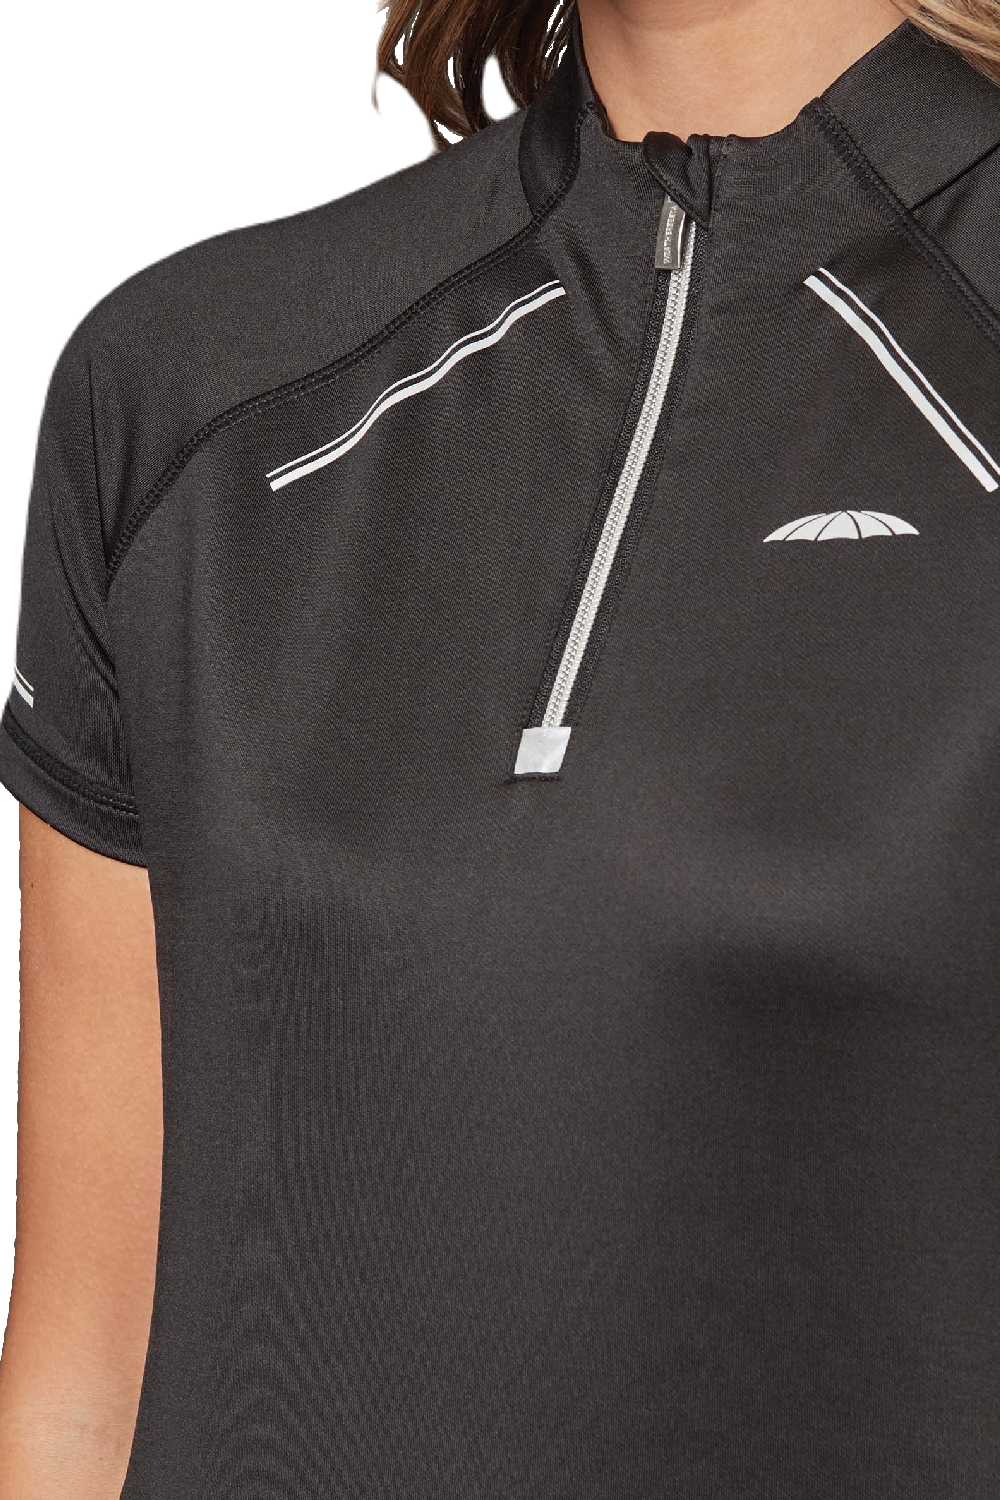 Weatherbeeta Victoria Premium Short Sleeve Top in Black 